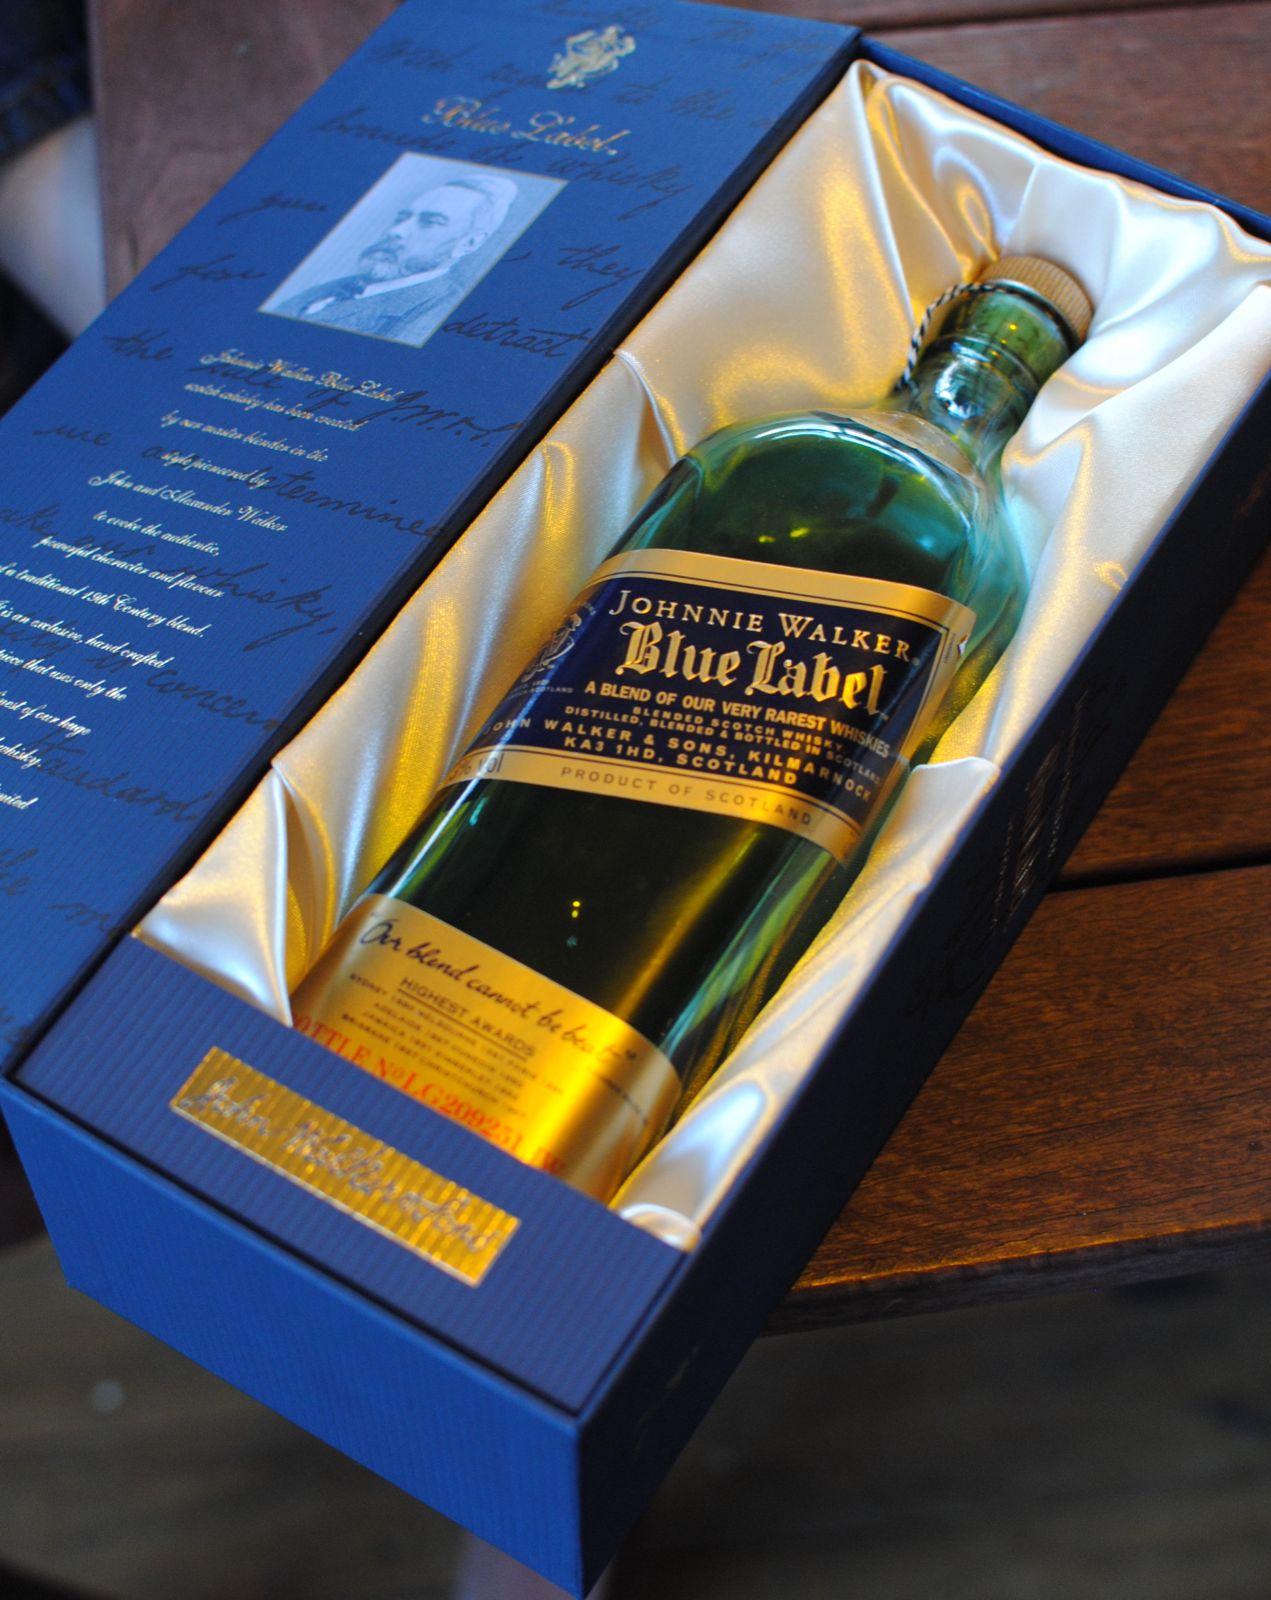 Richard Elliot's Blog: Whisky Night: Johnnie Walker Blue Label